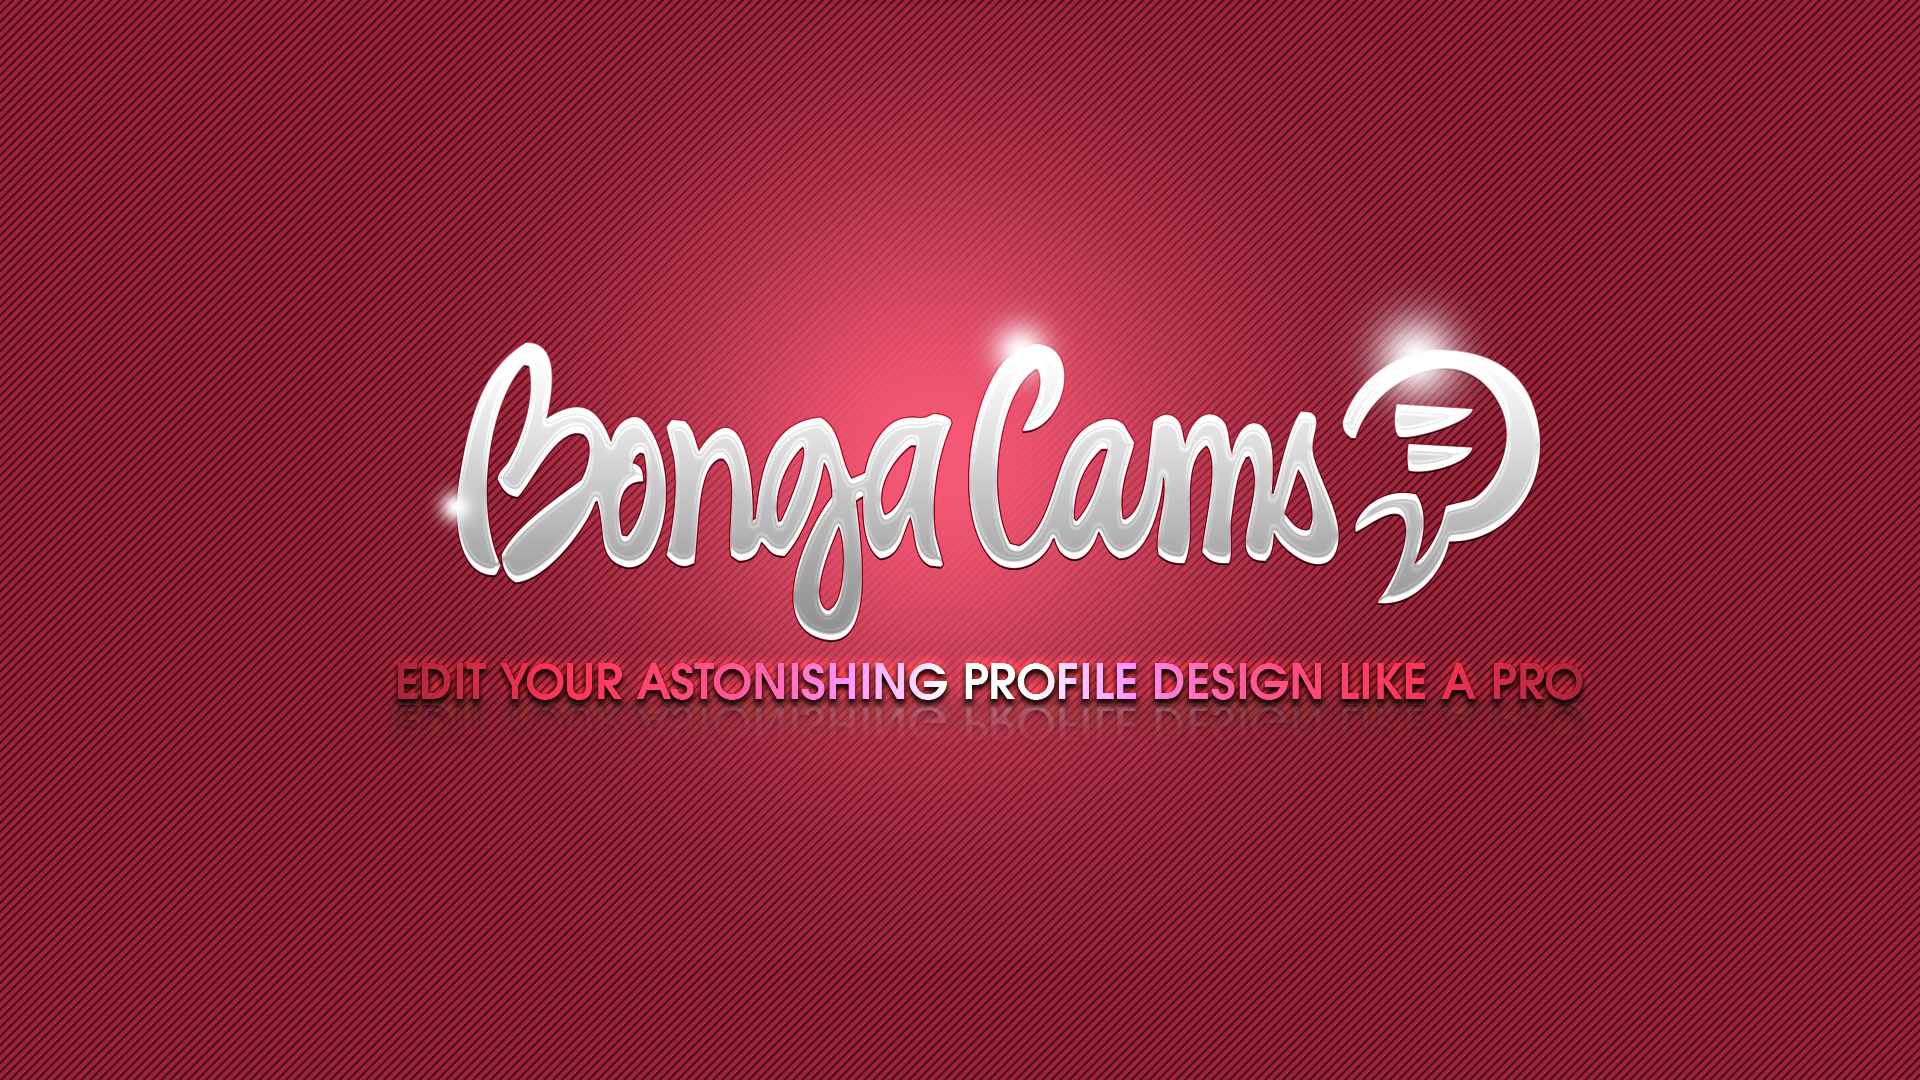 Kitty bongacams. Bongacams логотип. Бонгакамс логотип. Bongacams значок. Бонгакам видеореклама.